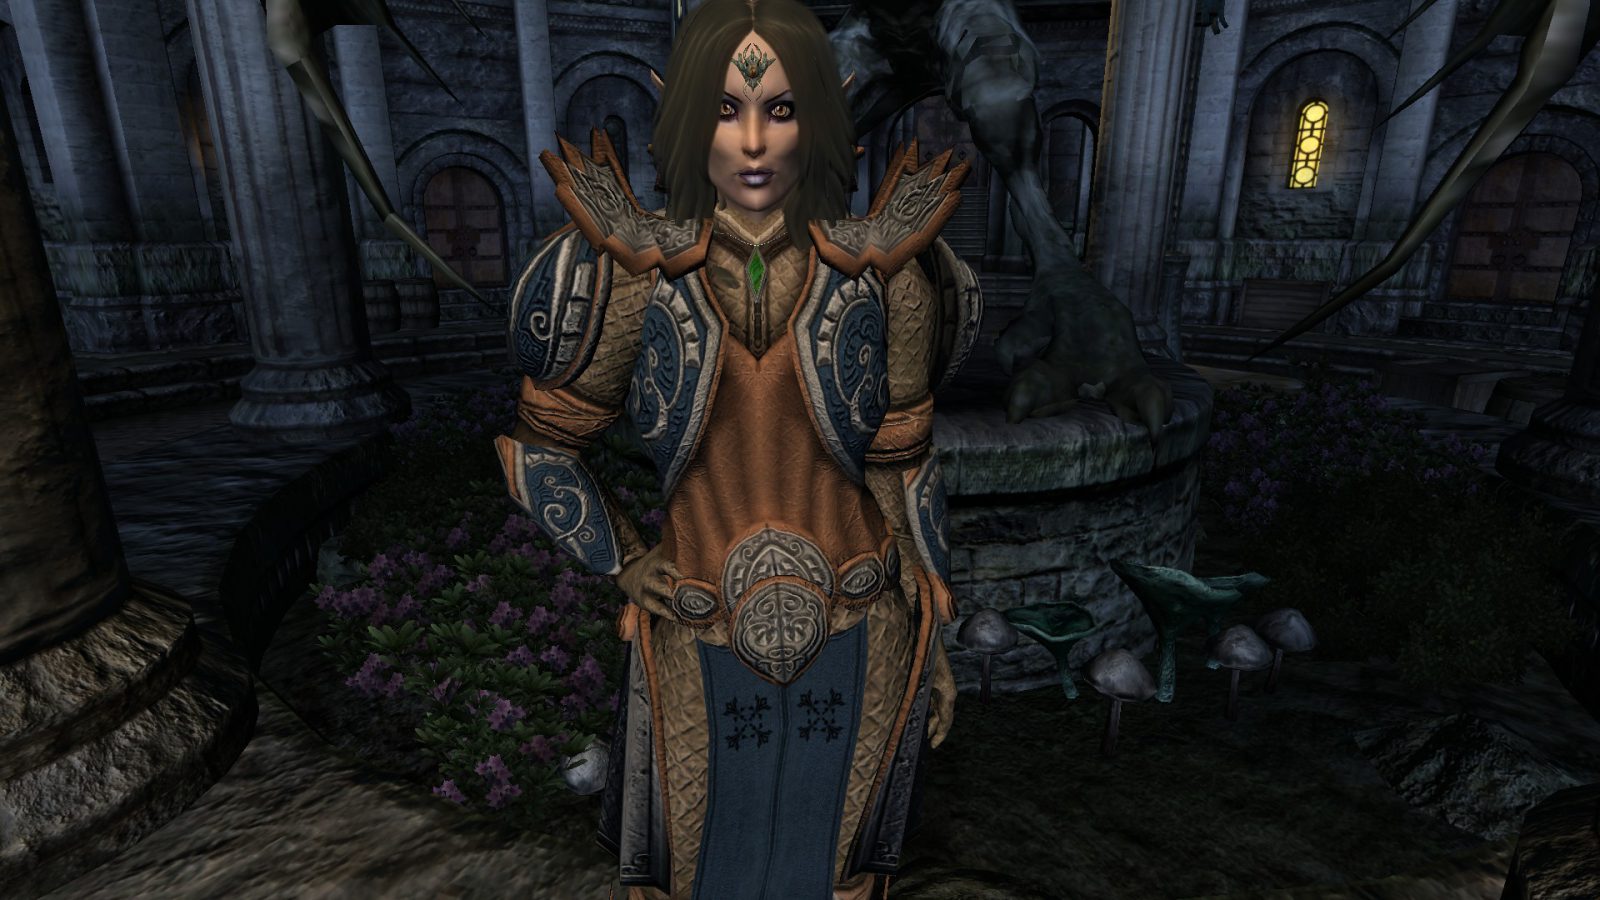 Armor of honor (female version)